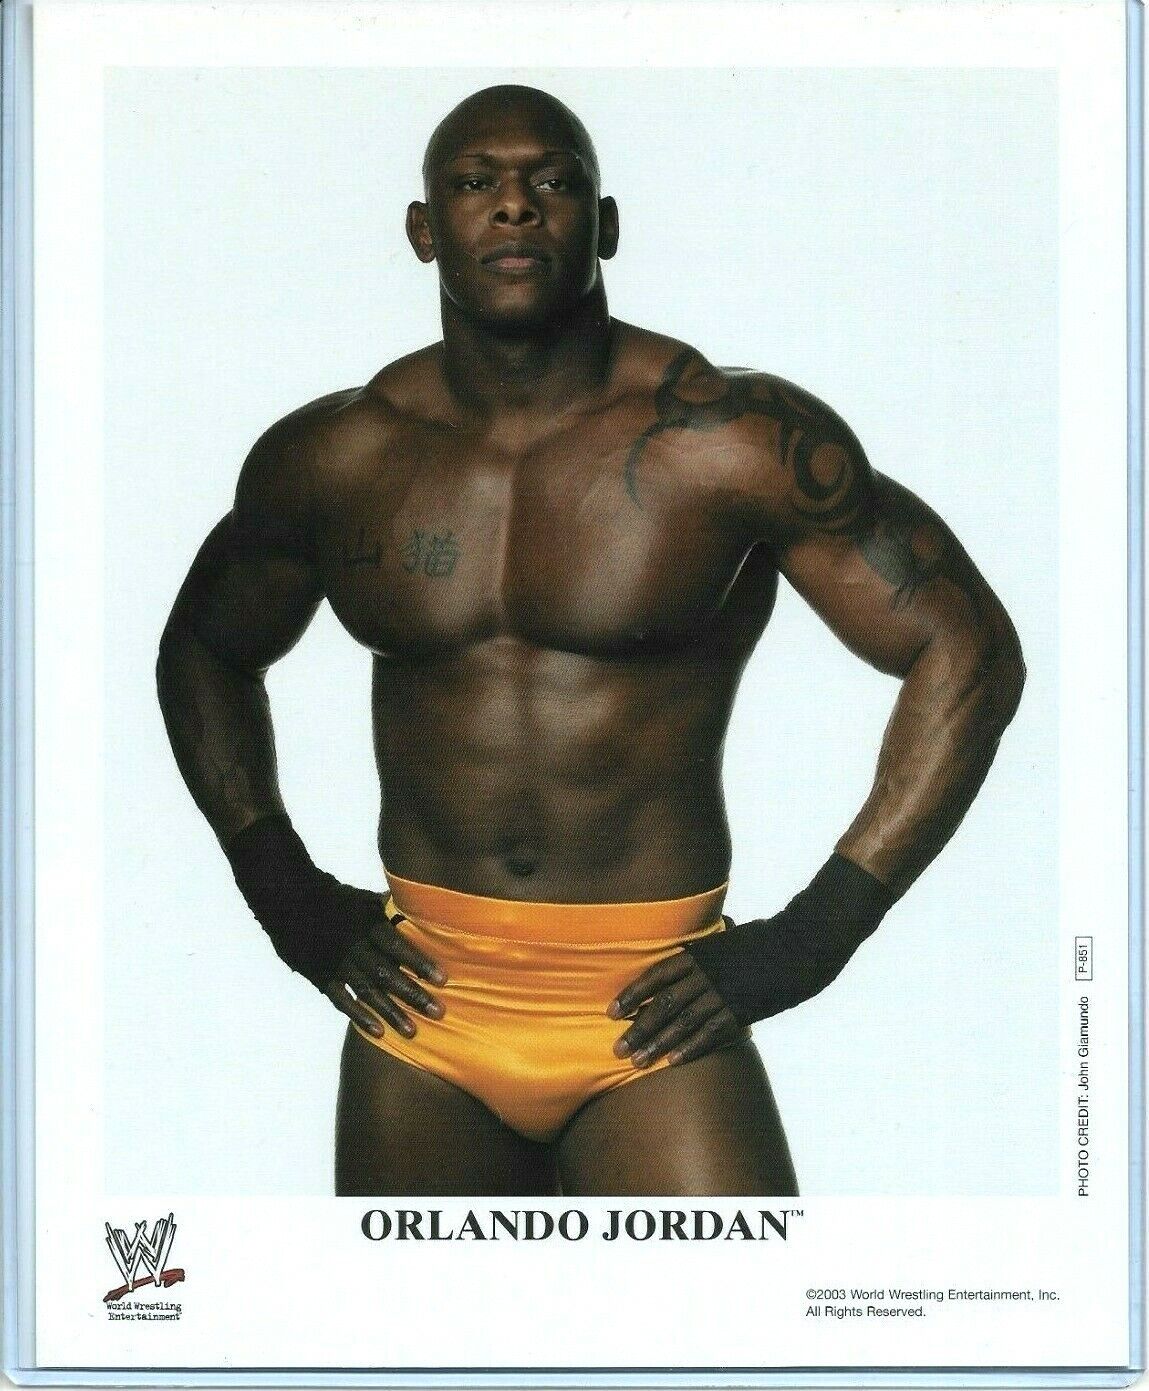 WWE ORLANDO JORDAN P-851 OFFICIAL LICENSED ORIGINAL 8X10 PROMO Photo Poster painting RARE